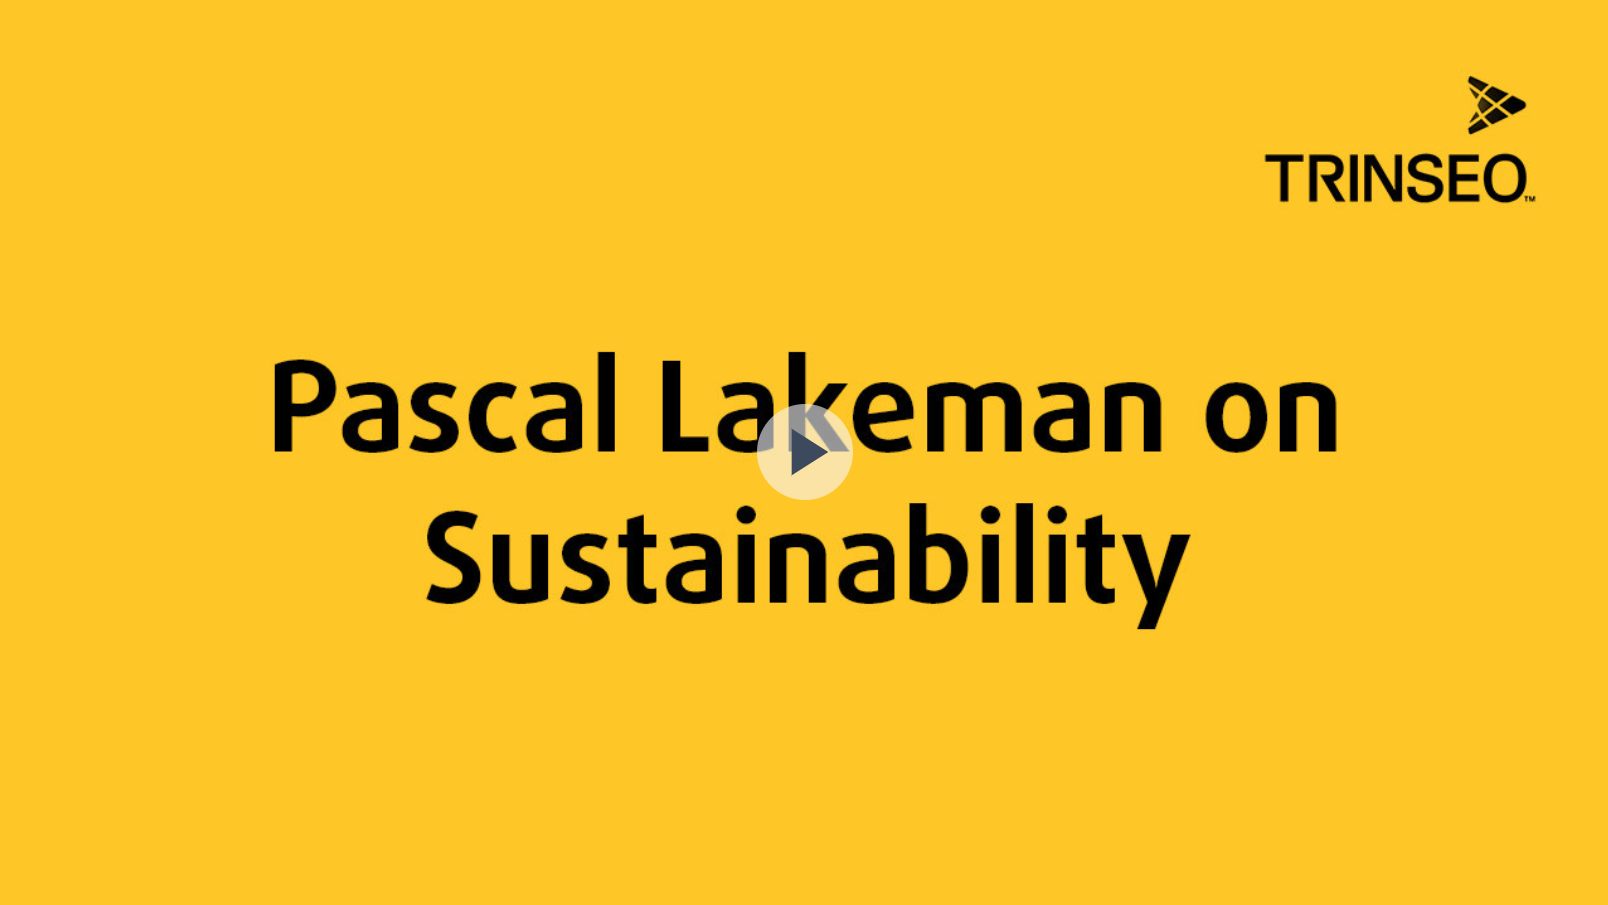 Pascal Lakeman谈论可持续发展的视频缩略图